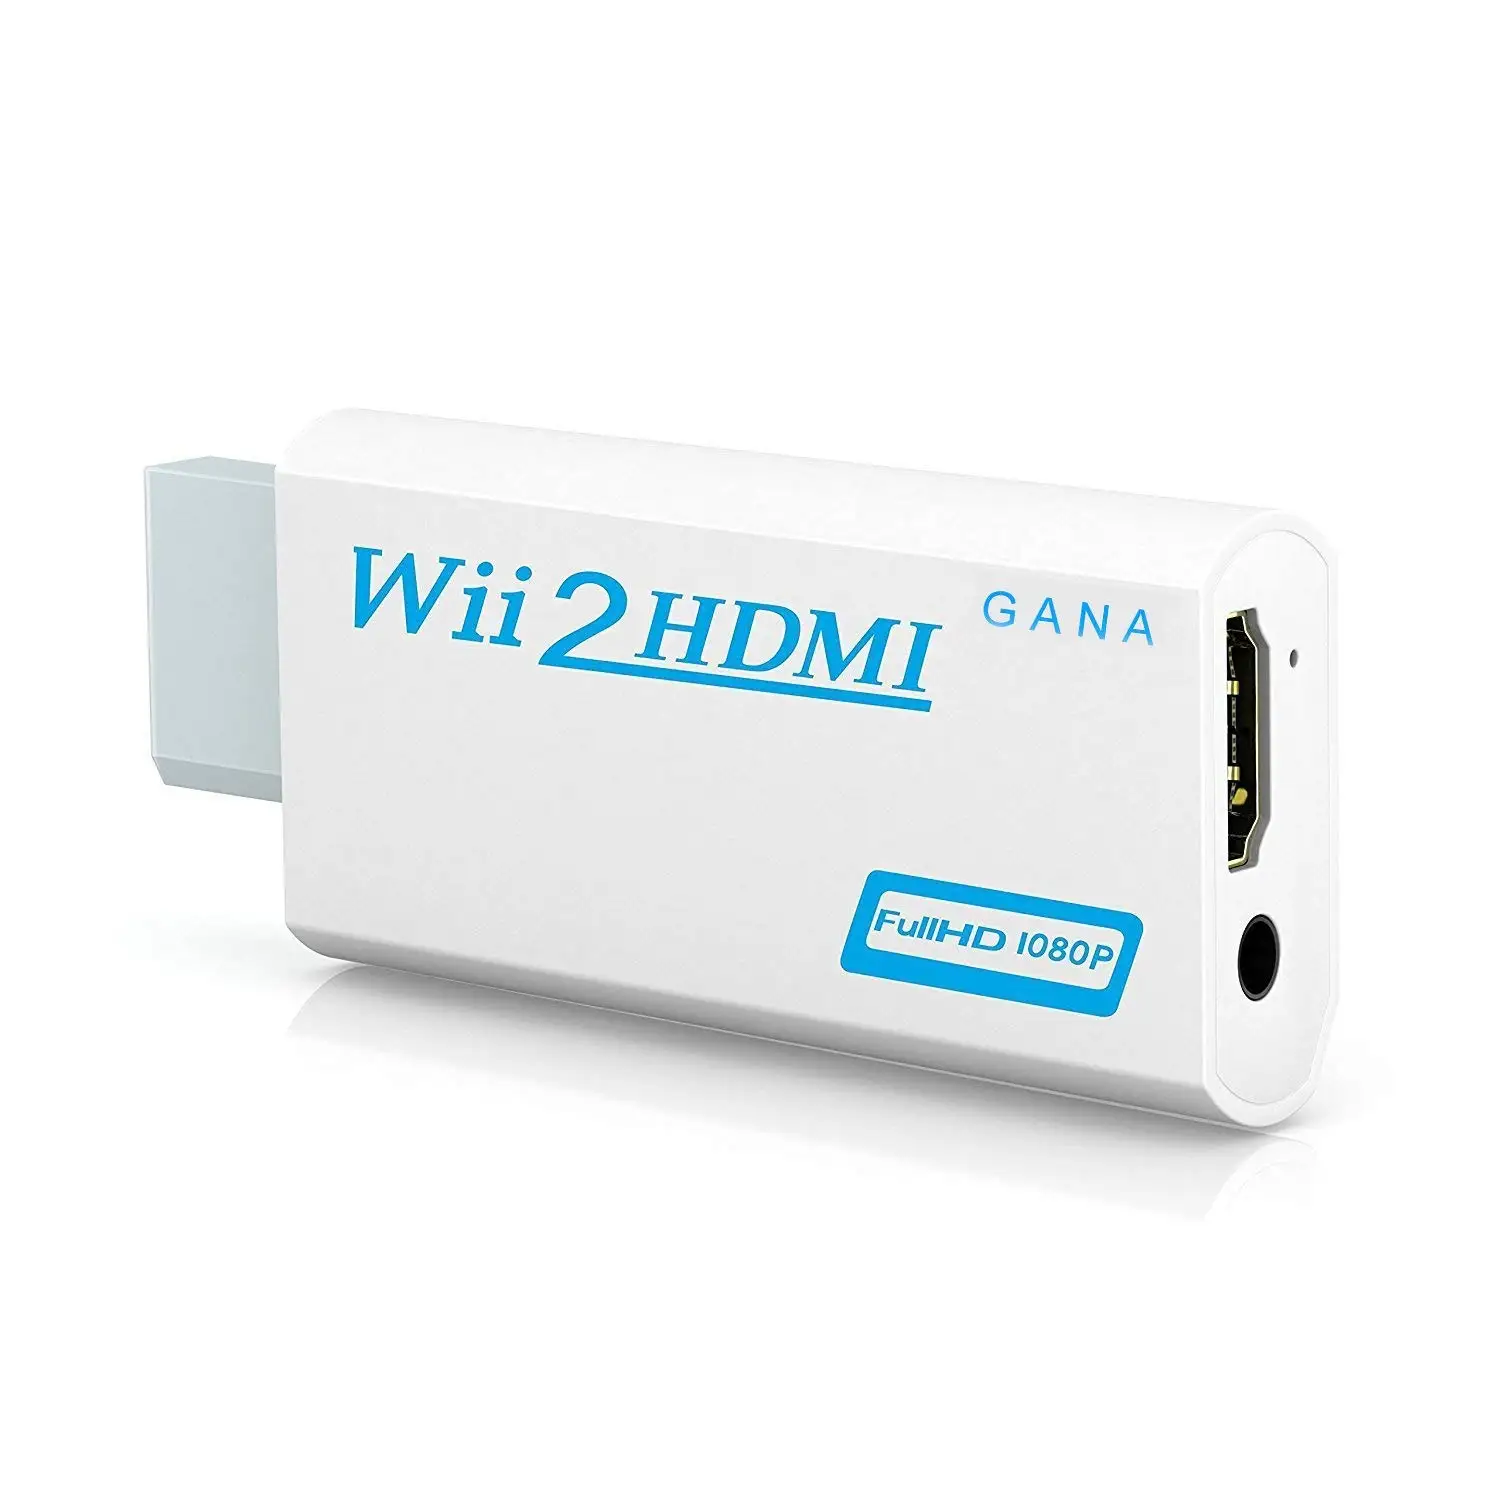 Full HD 1080P wii в HDMI конвертер адаптер wii 2HDMI конвертер 3,5 мм аудио для ПК HDTV монитор дисплей